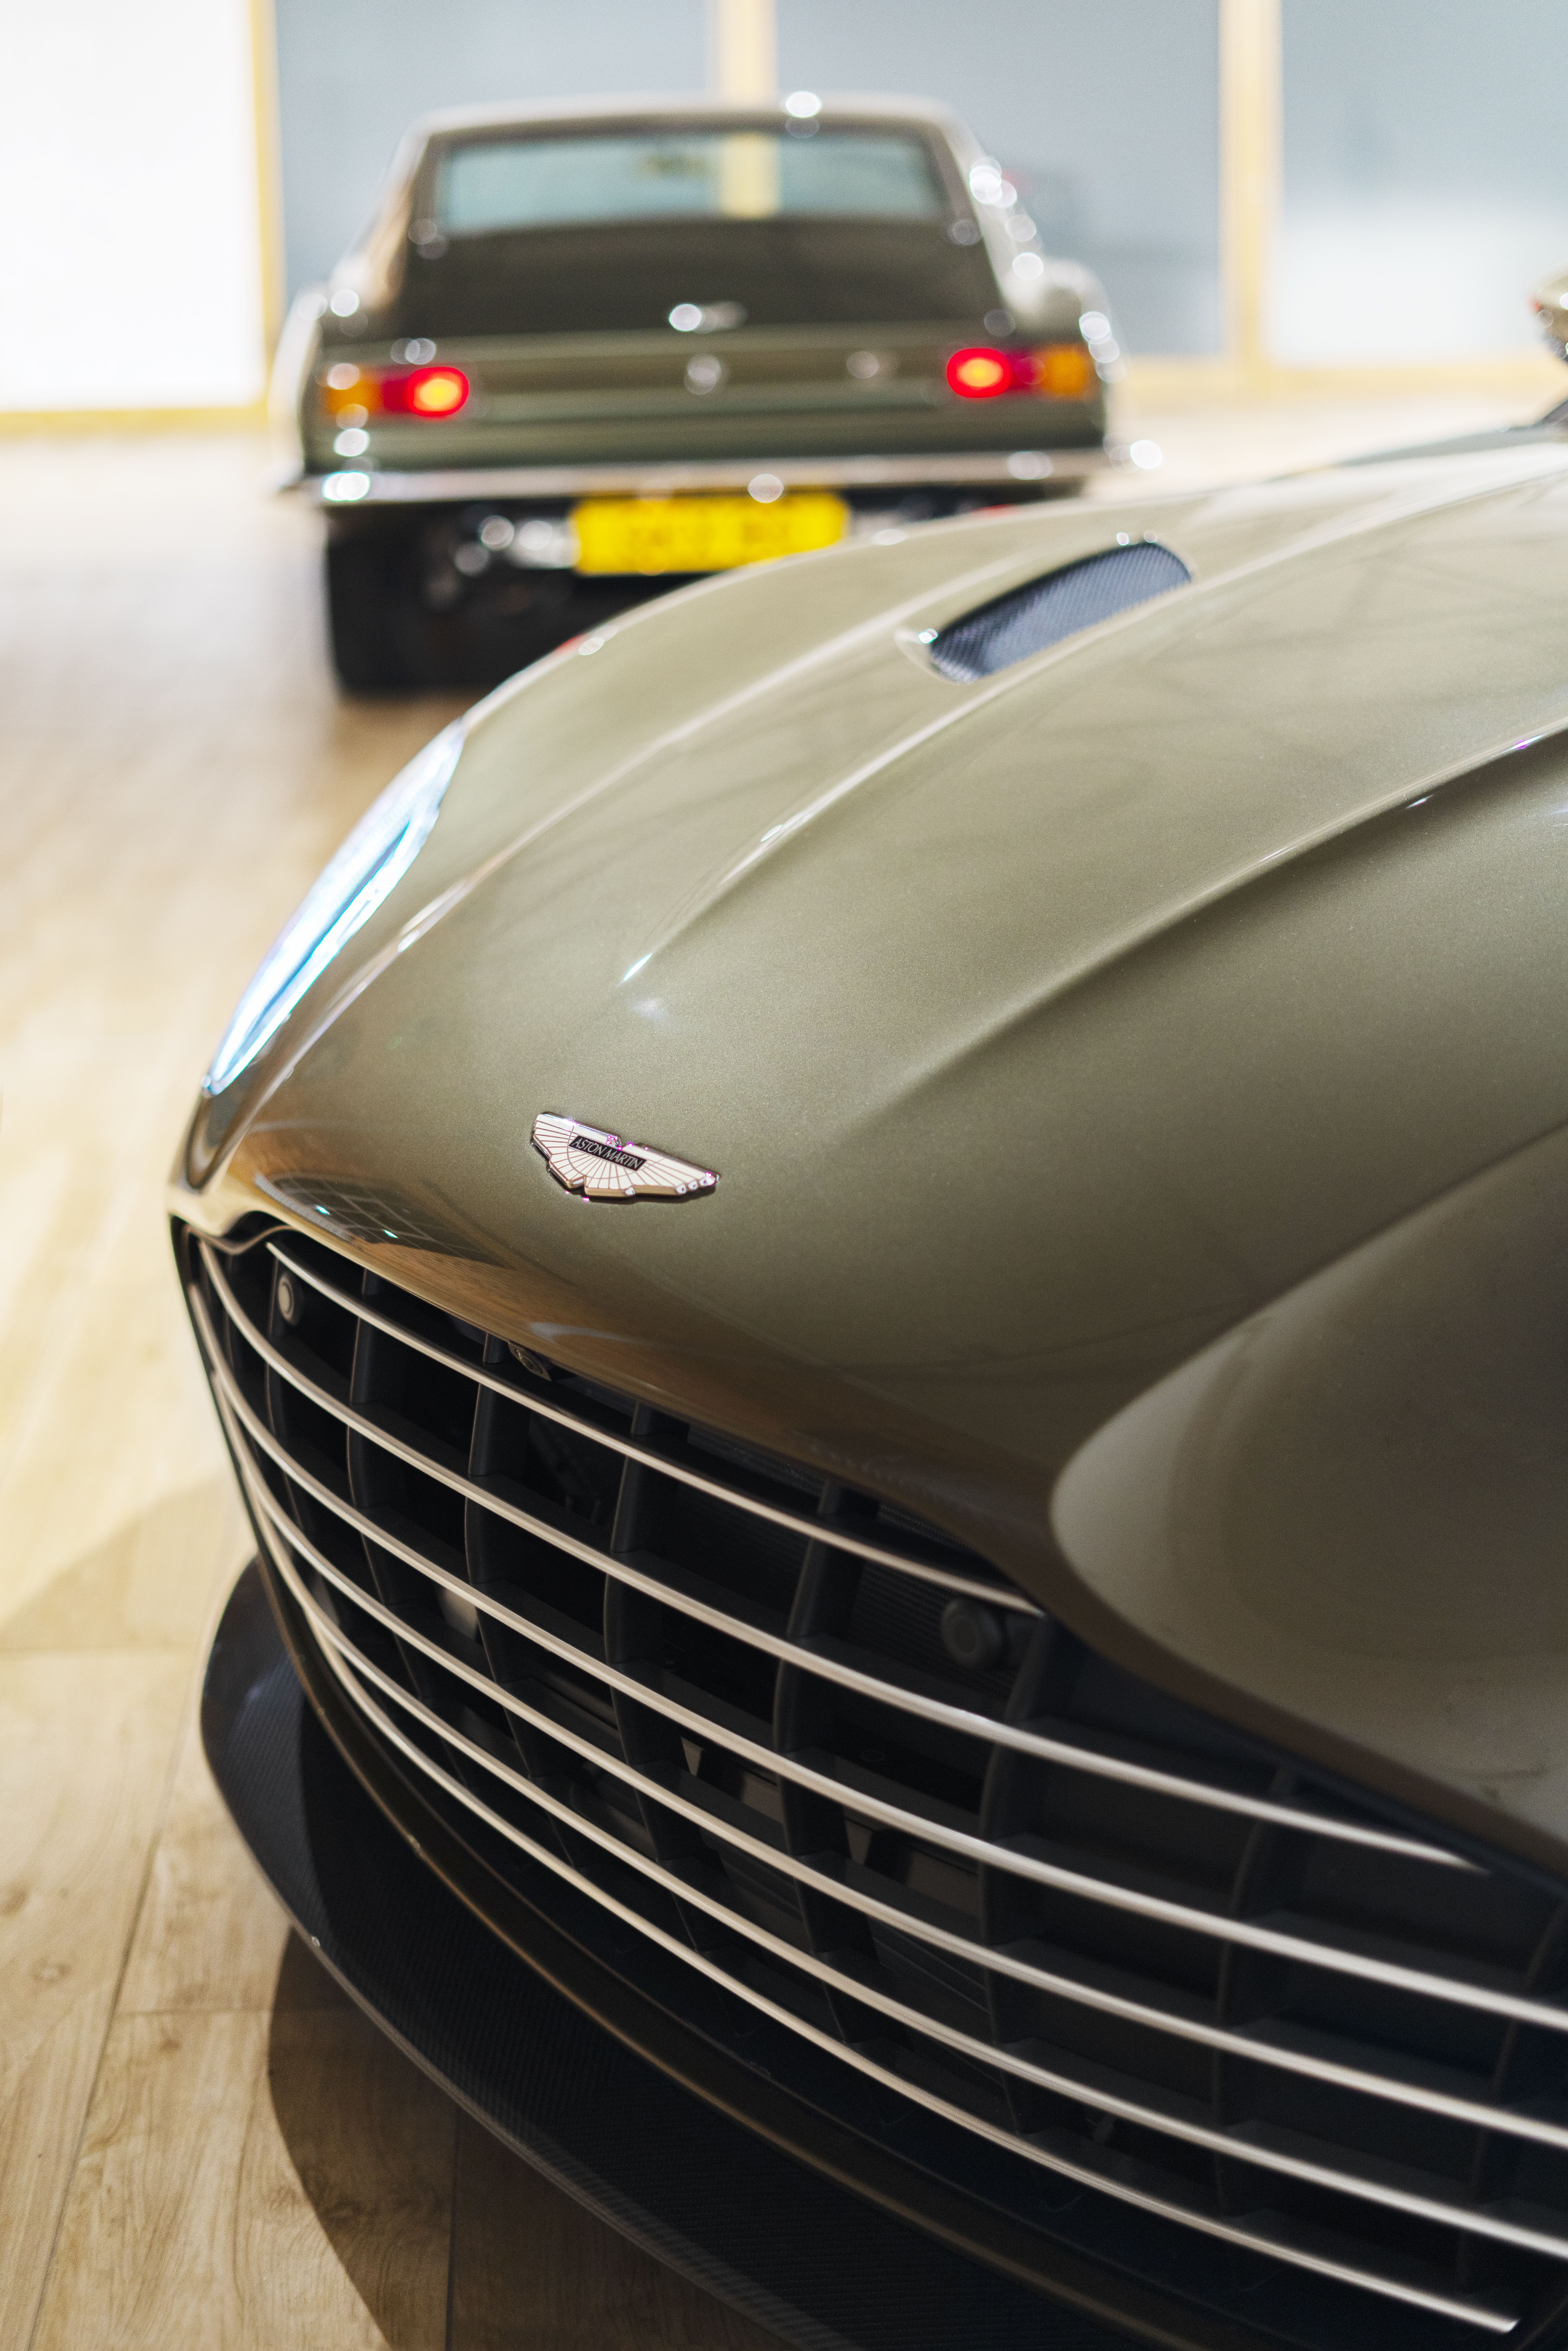 2019 Aston Martin DBS Superleggera On Her Majesty's Secret Service Edition